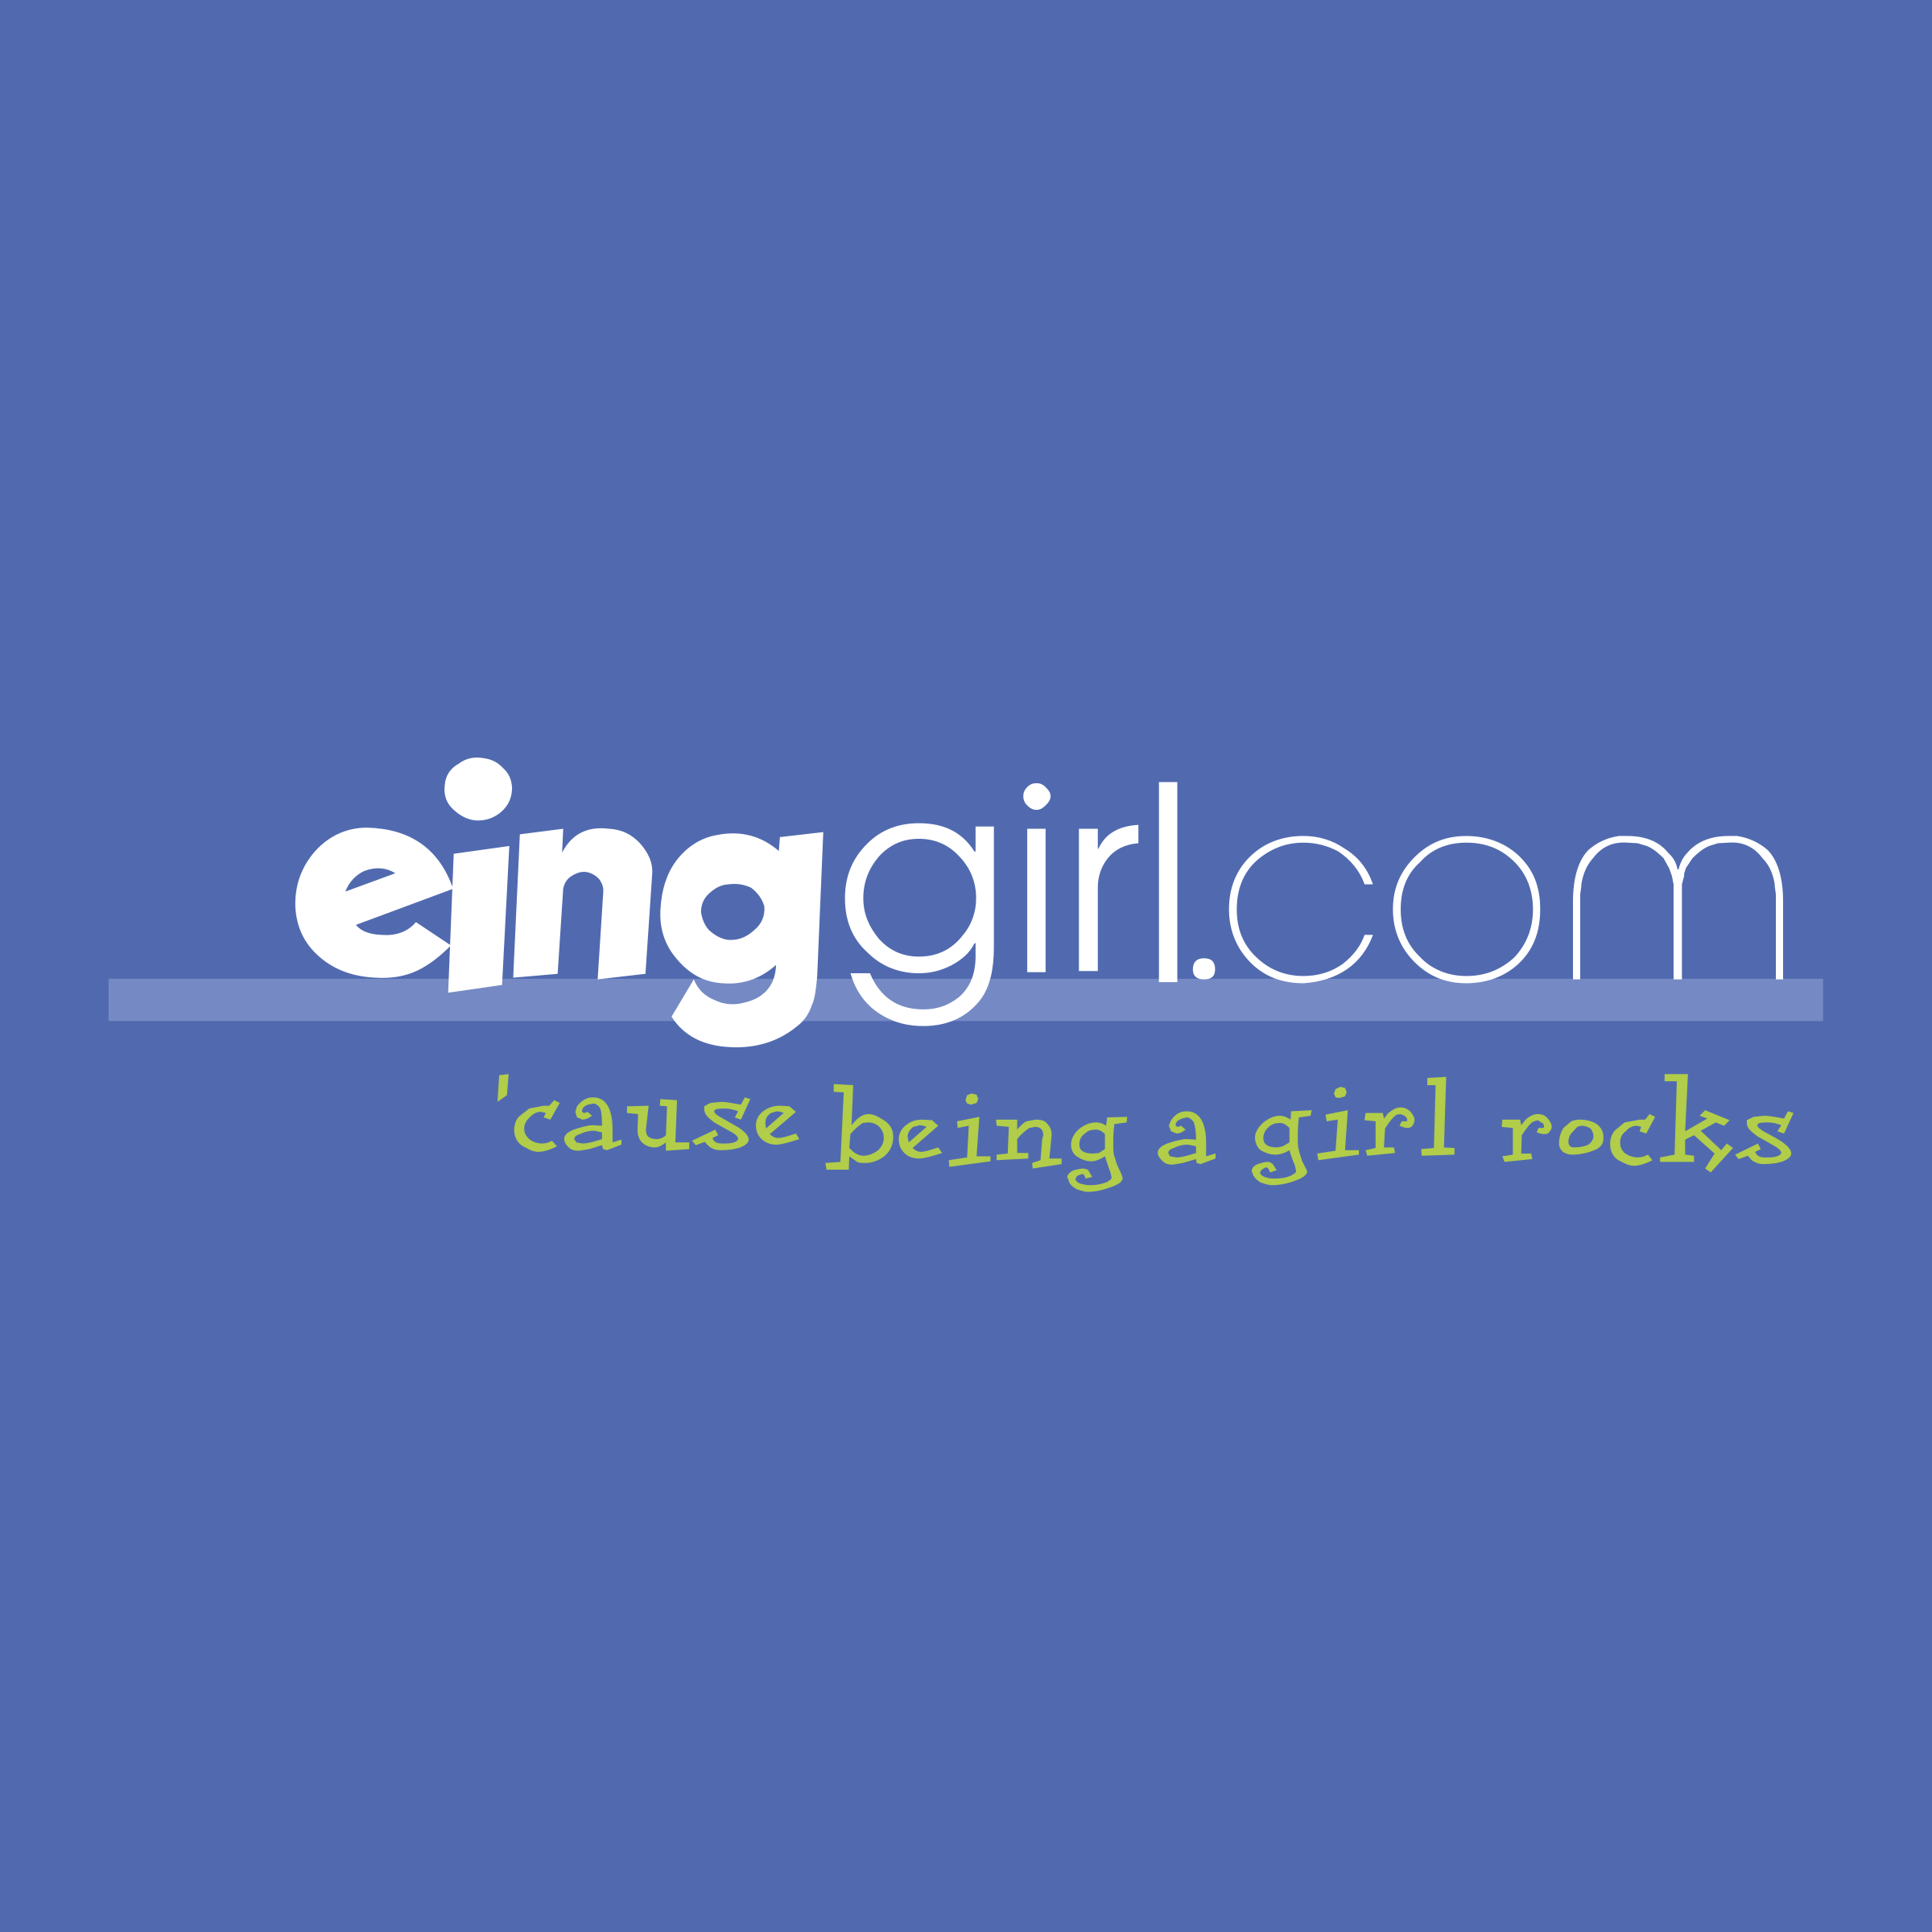 BeingGirl Logo - BeingGirl com Logo PNG Transparent & SVG Vector - Freebie Supply